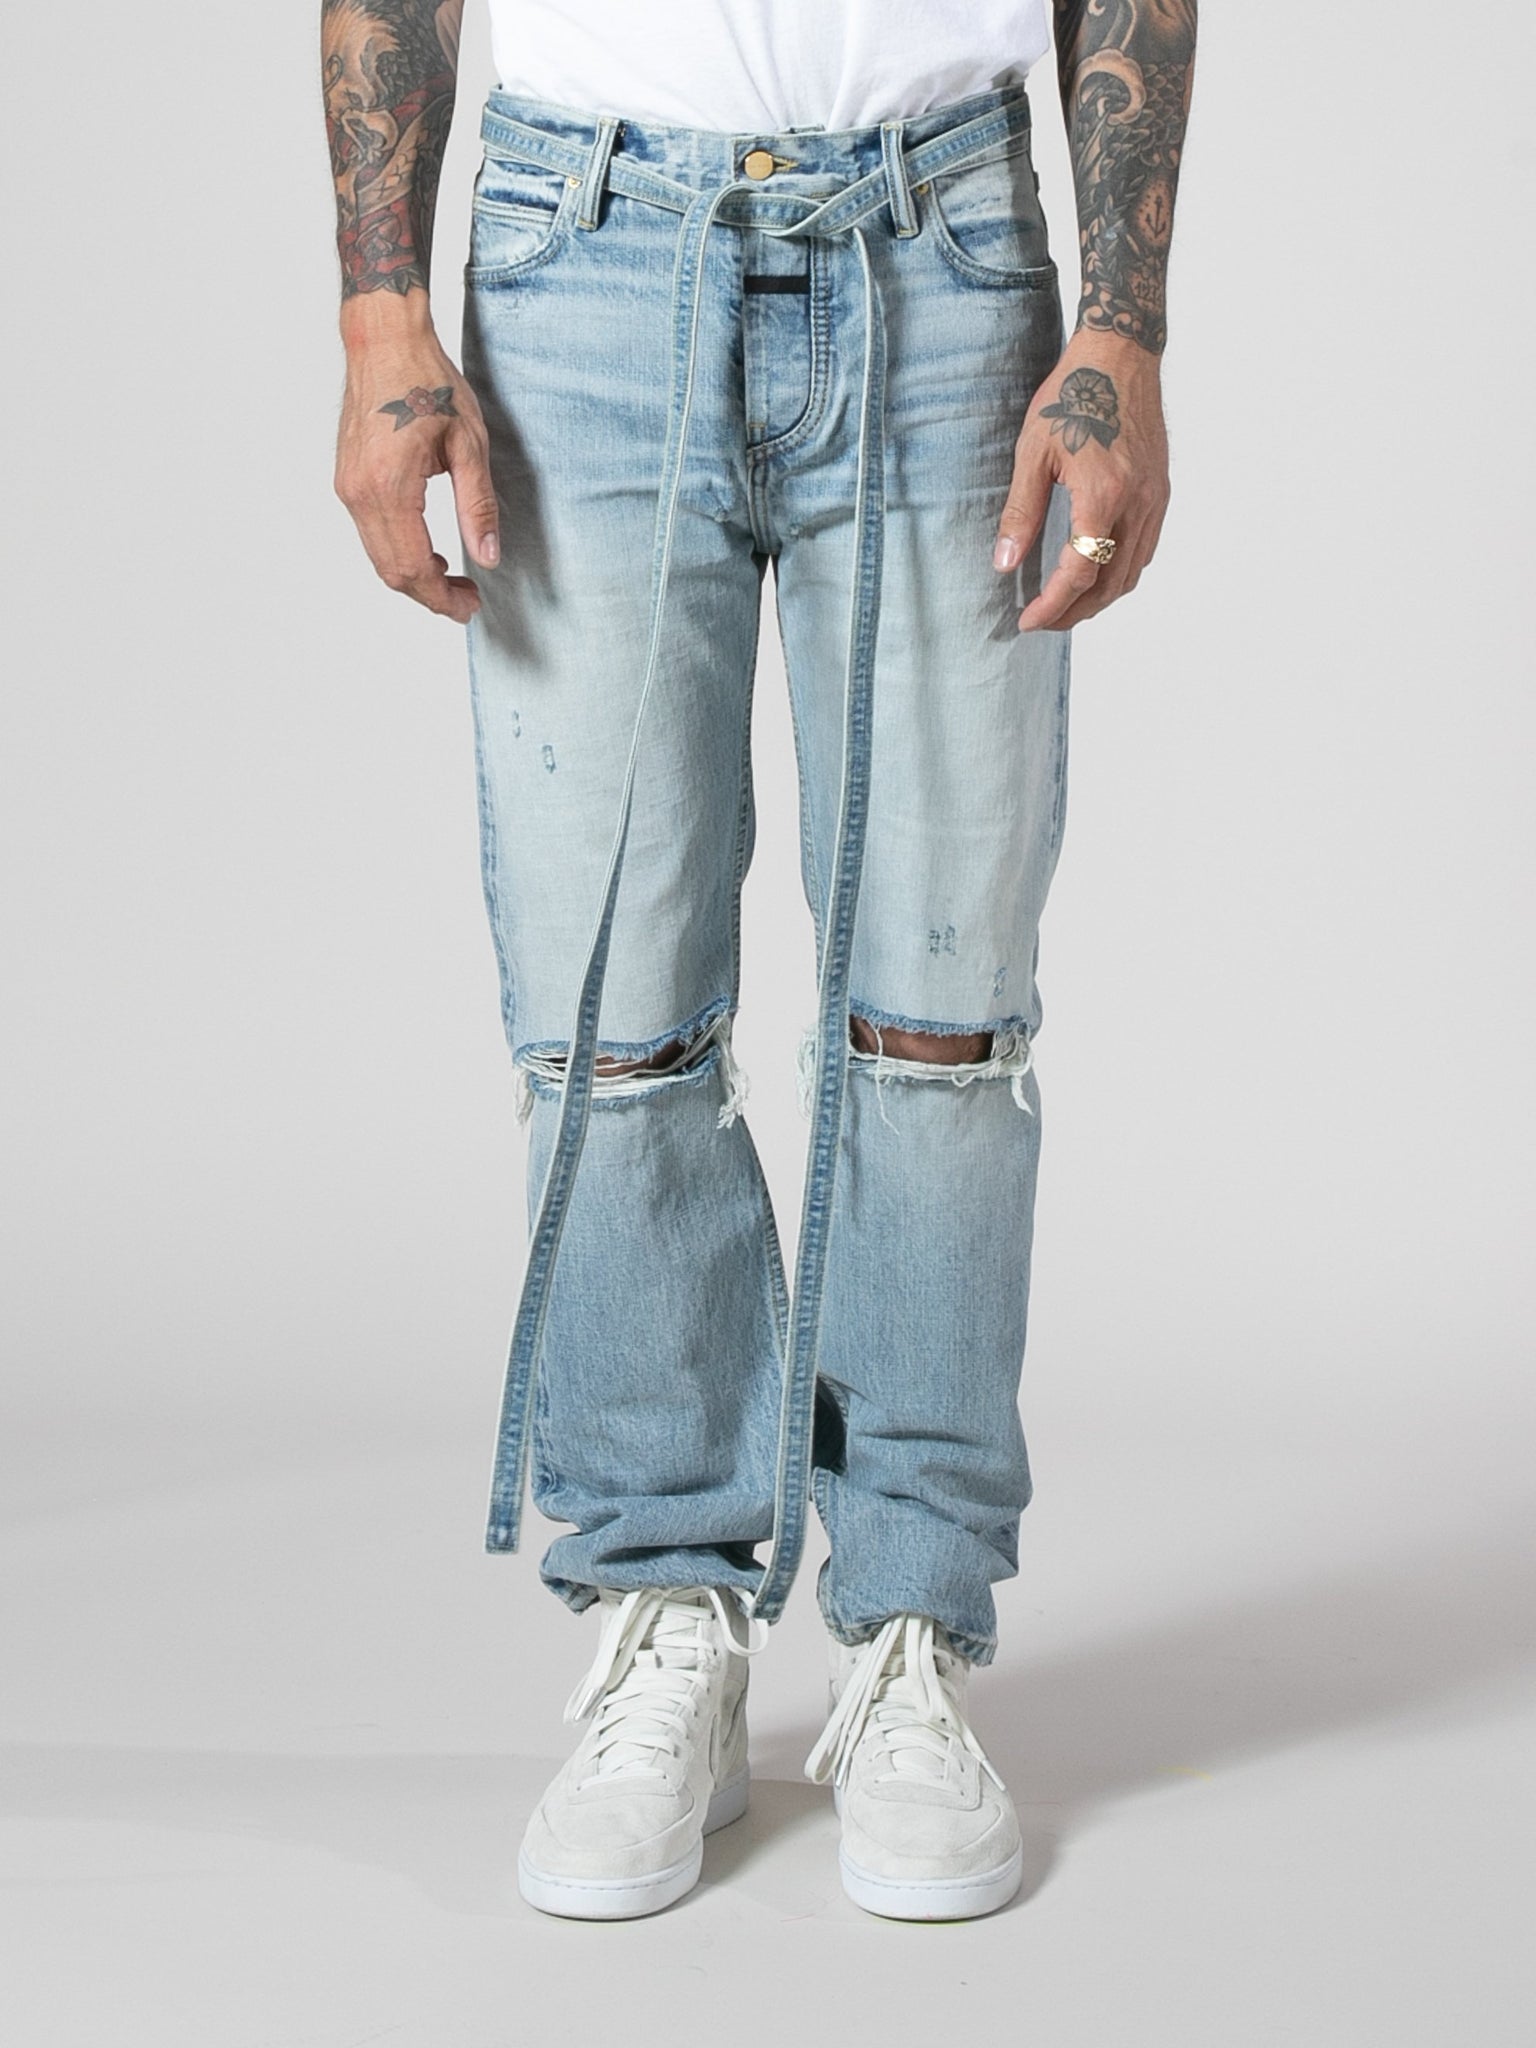 Buy Denim Jeans Online at UNION LOS ANGELES